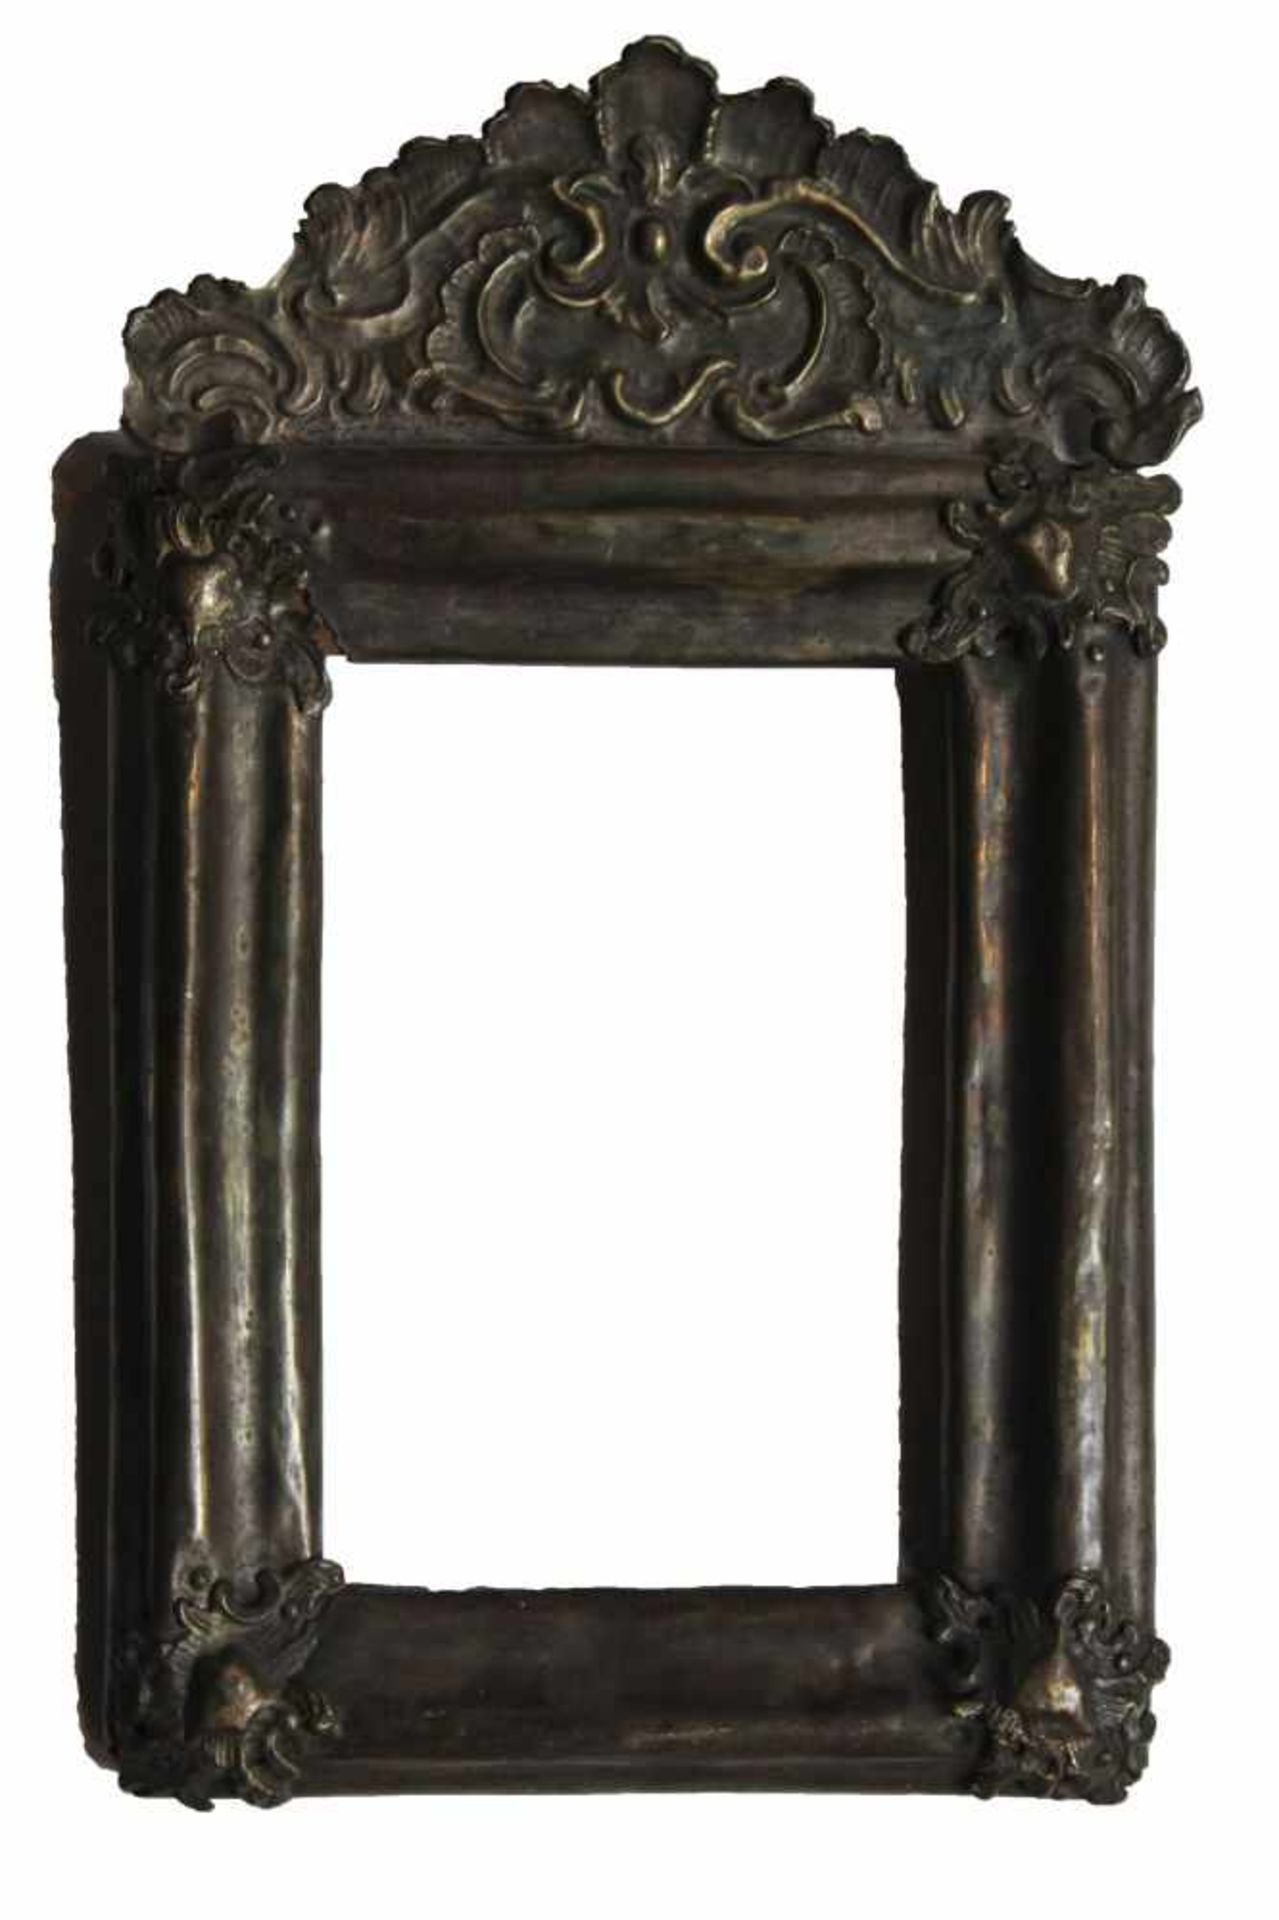 Kl. Rahmen um 1800 Messing versilbert, verziert mit Rocaillen und Blattwerk, Maße ca. 32,5x20,5 cm